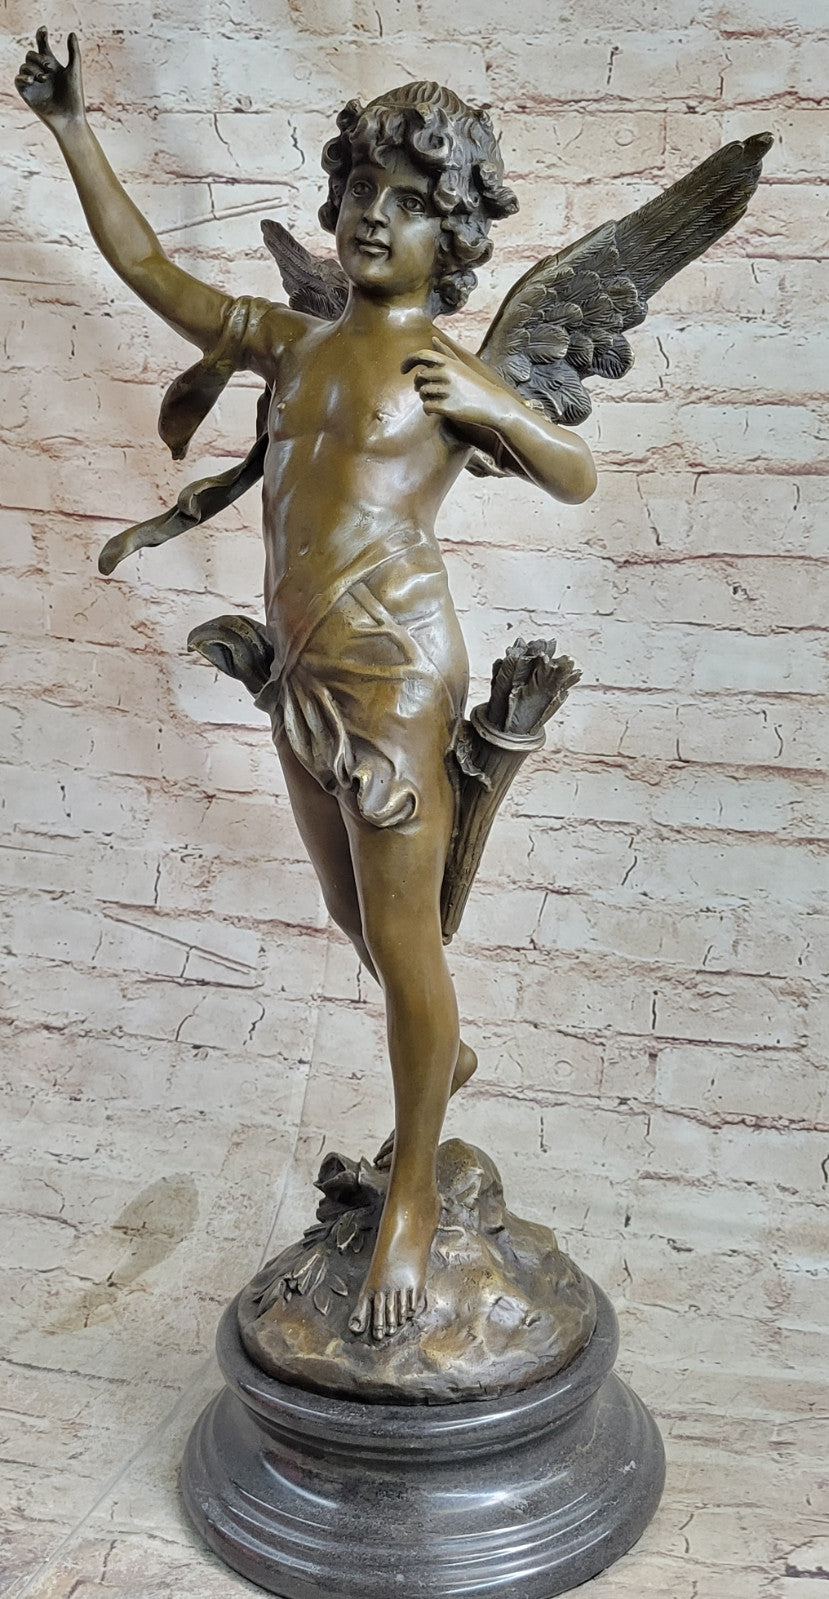 Signed Moreau Guardian Angel From Heaven Bronze Statue Sculpture Figurine Figure